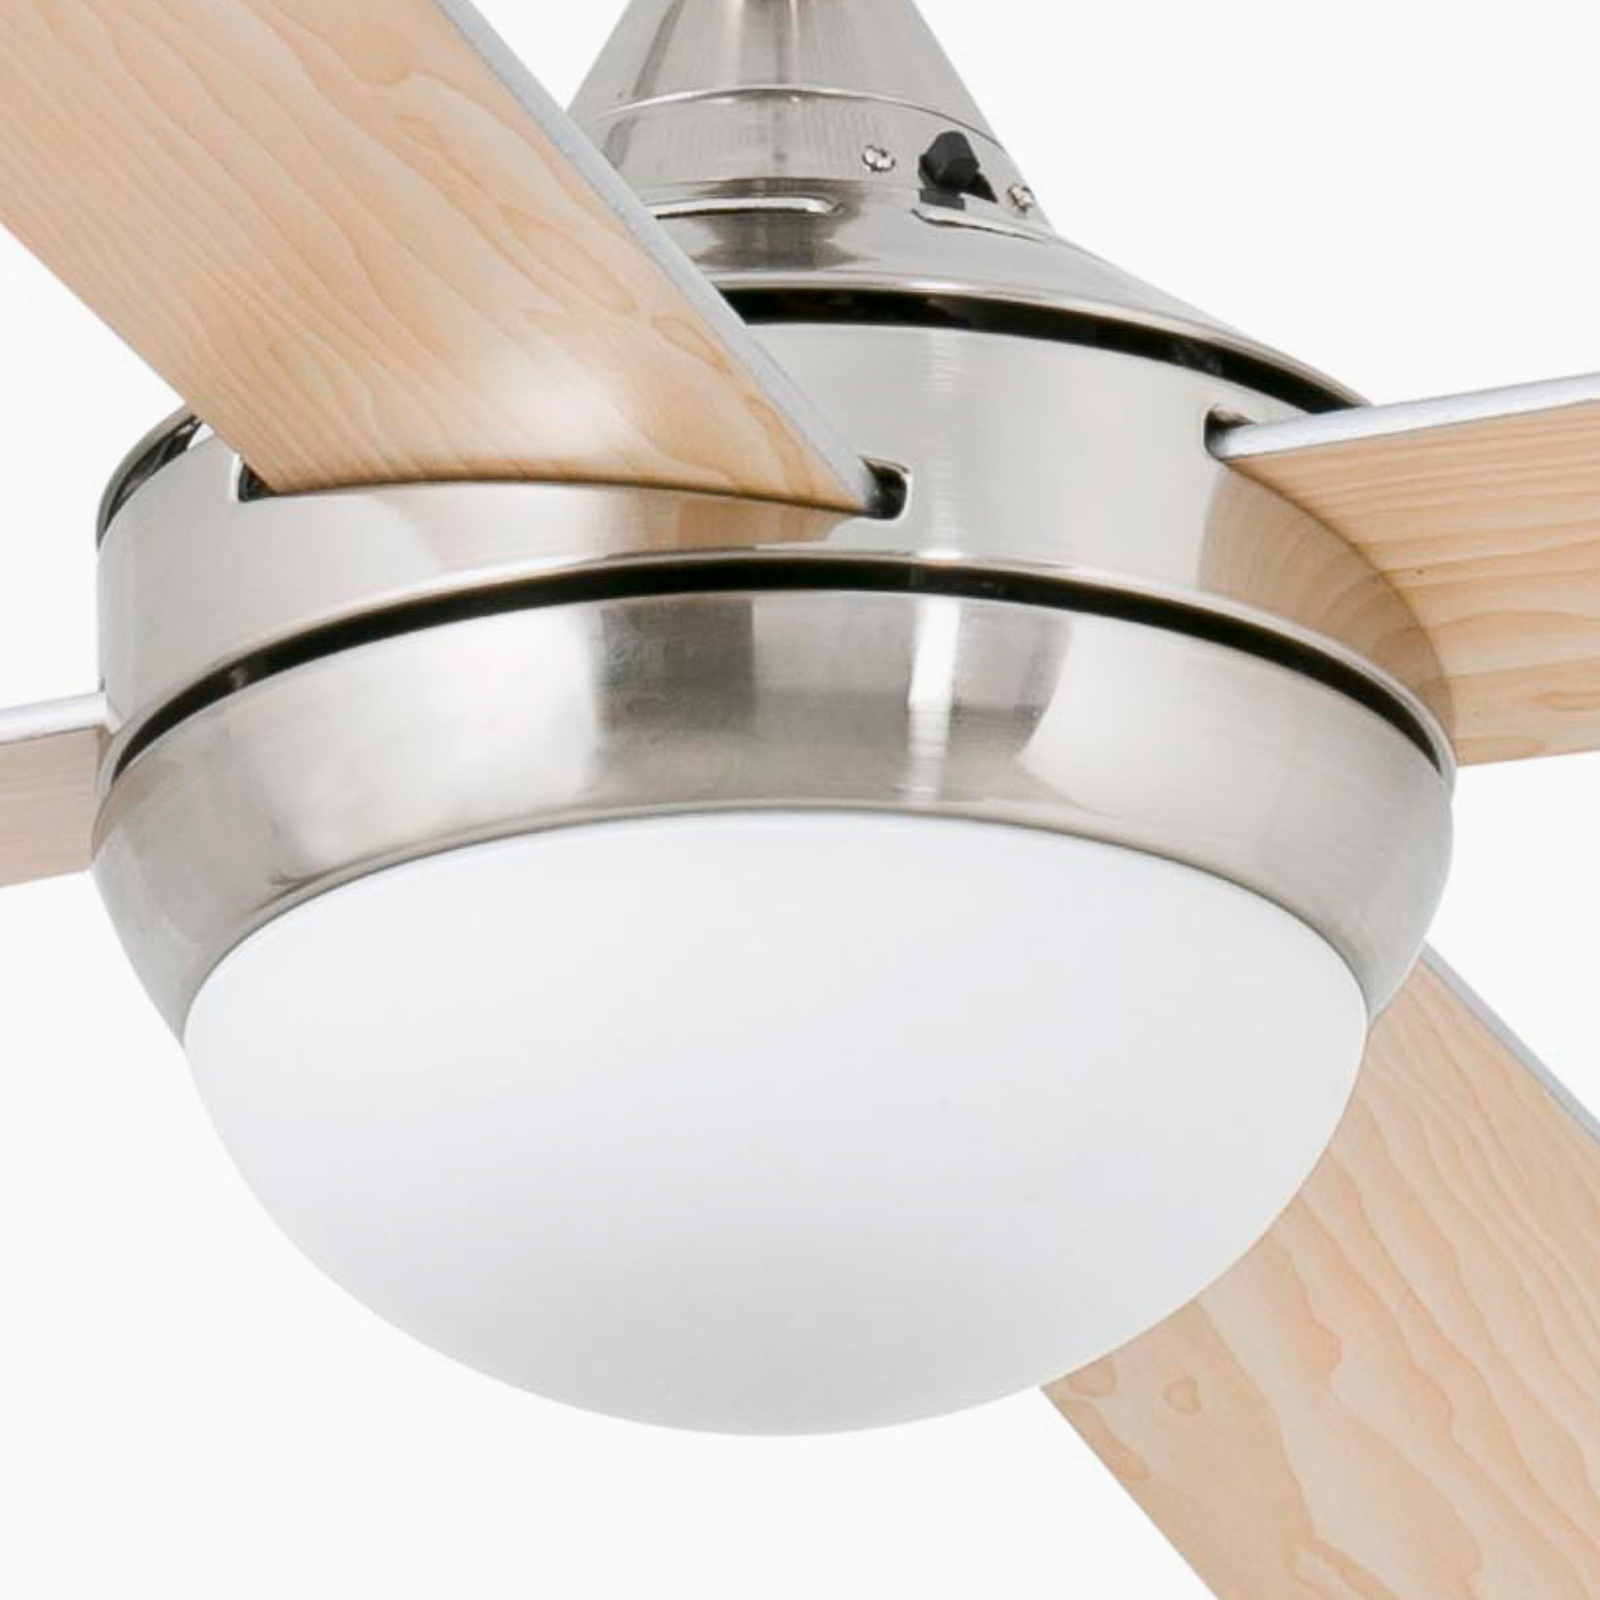 Mini Icaria S ceiling fan, light nickel/wood